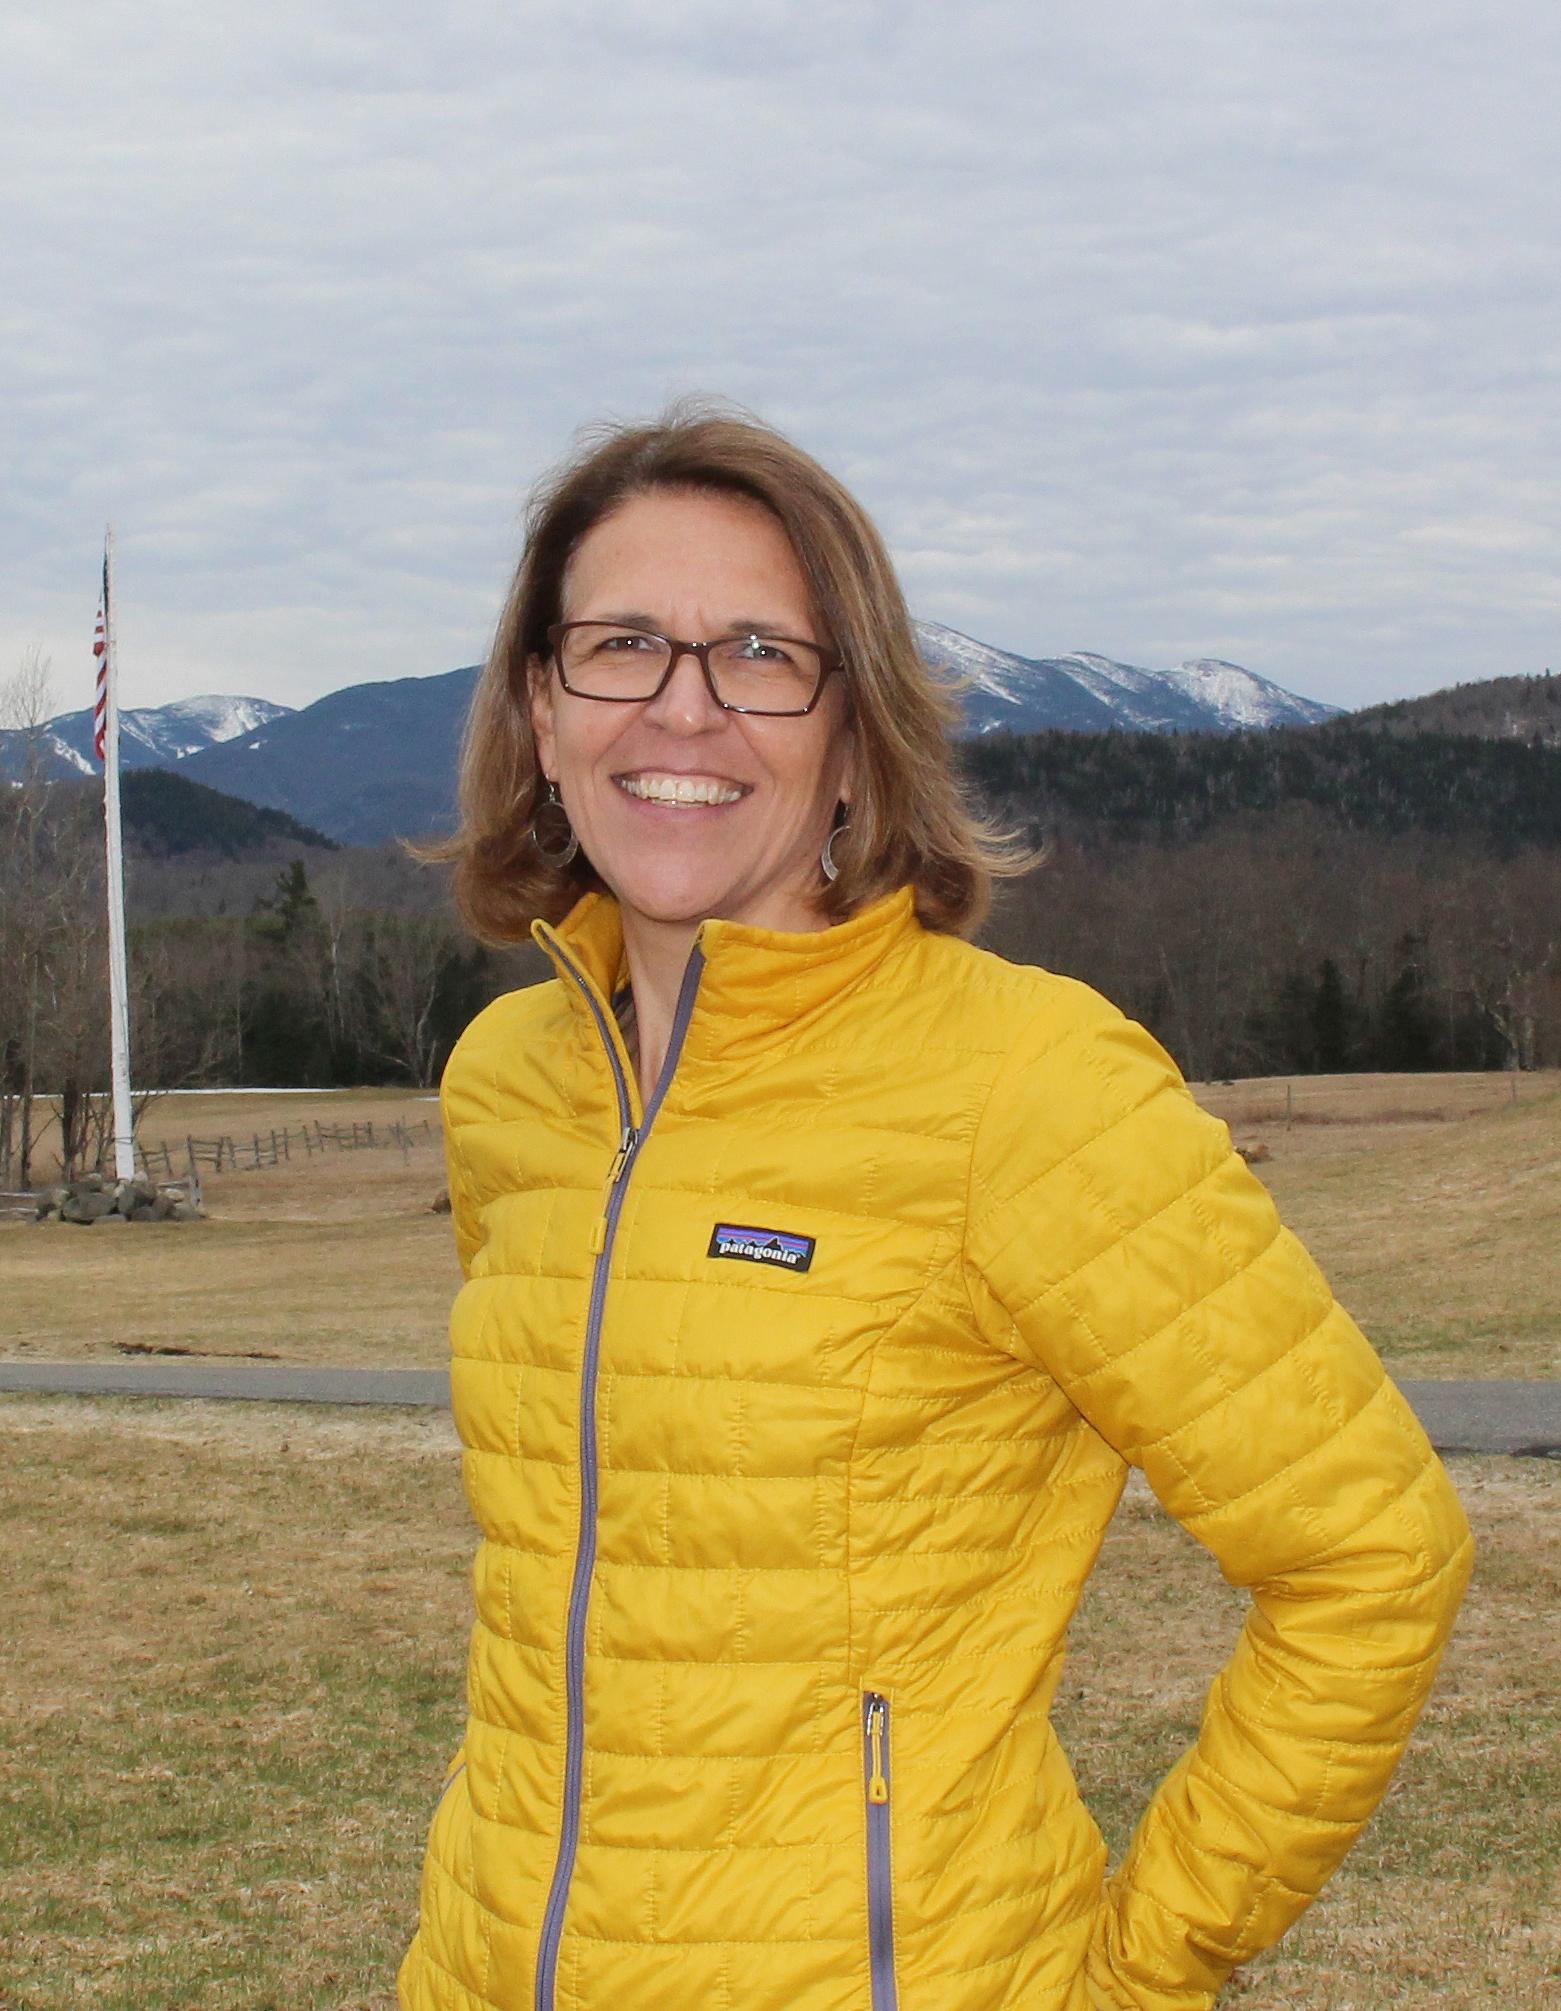 Connie Prickett, Vice President of Communications & Strategic Initiatives of Adirondack Foundation